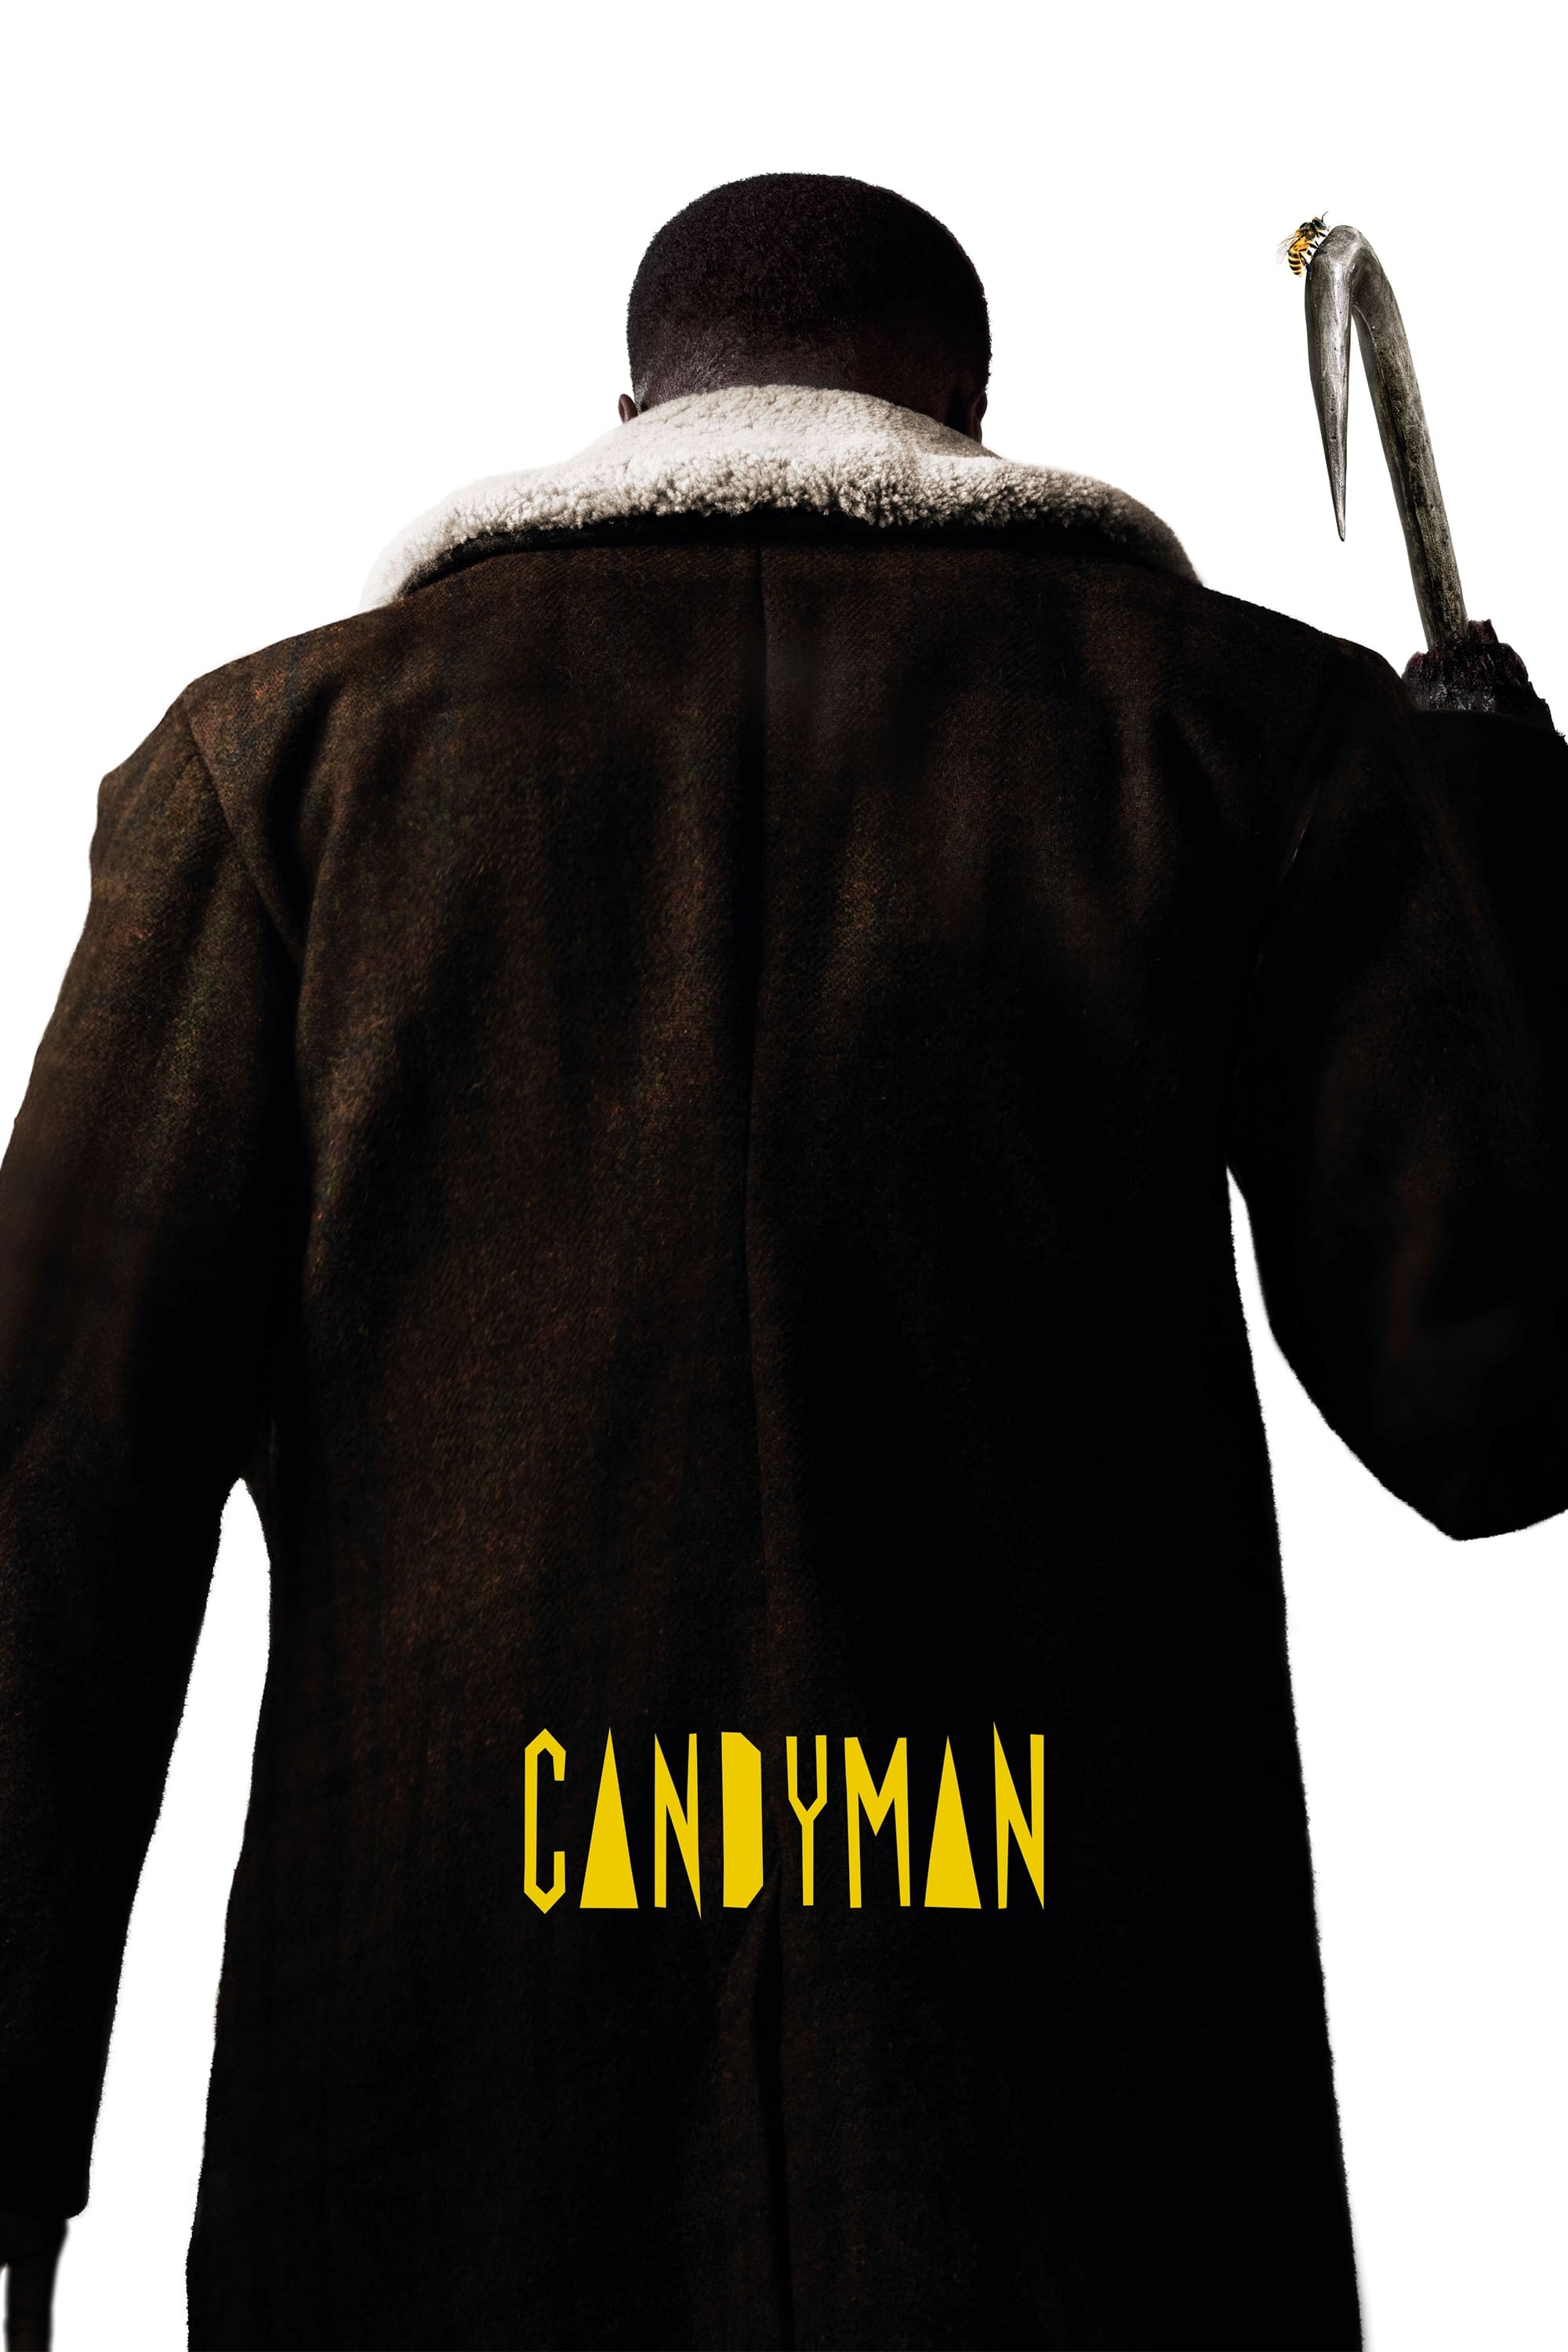 Nonton dan download Streaming Film Candyman (2021) Subtitle Indonesia full movie